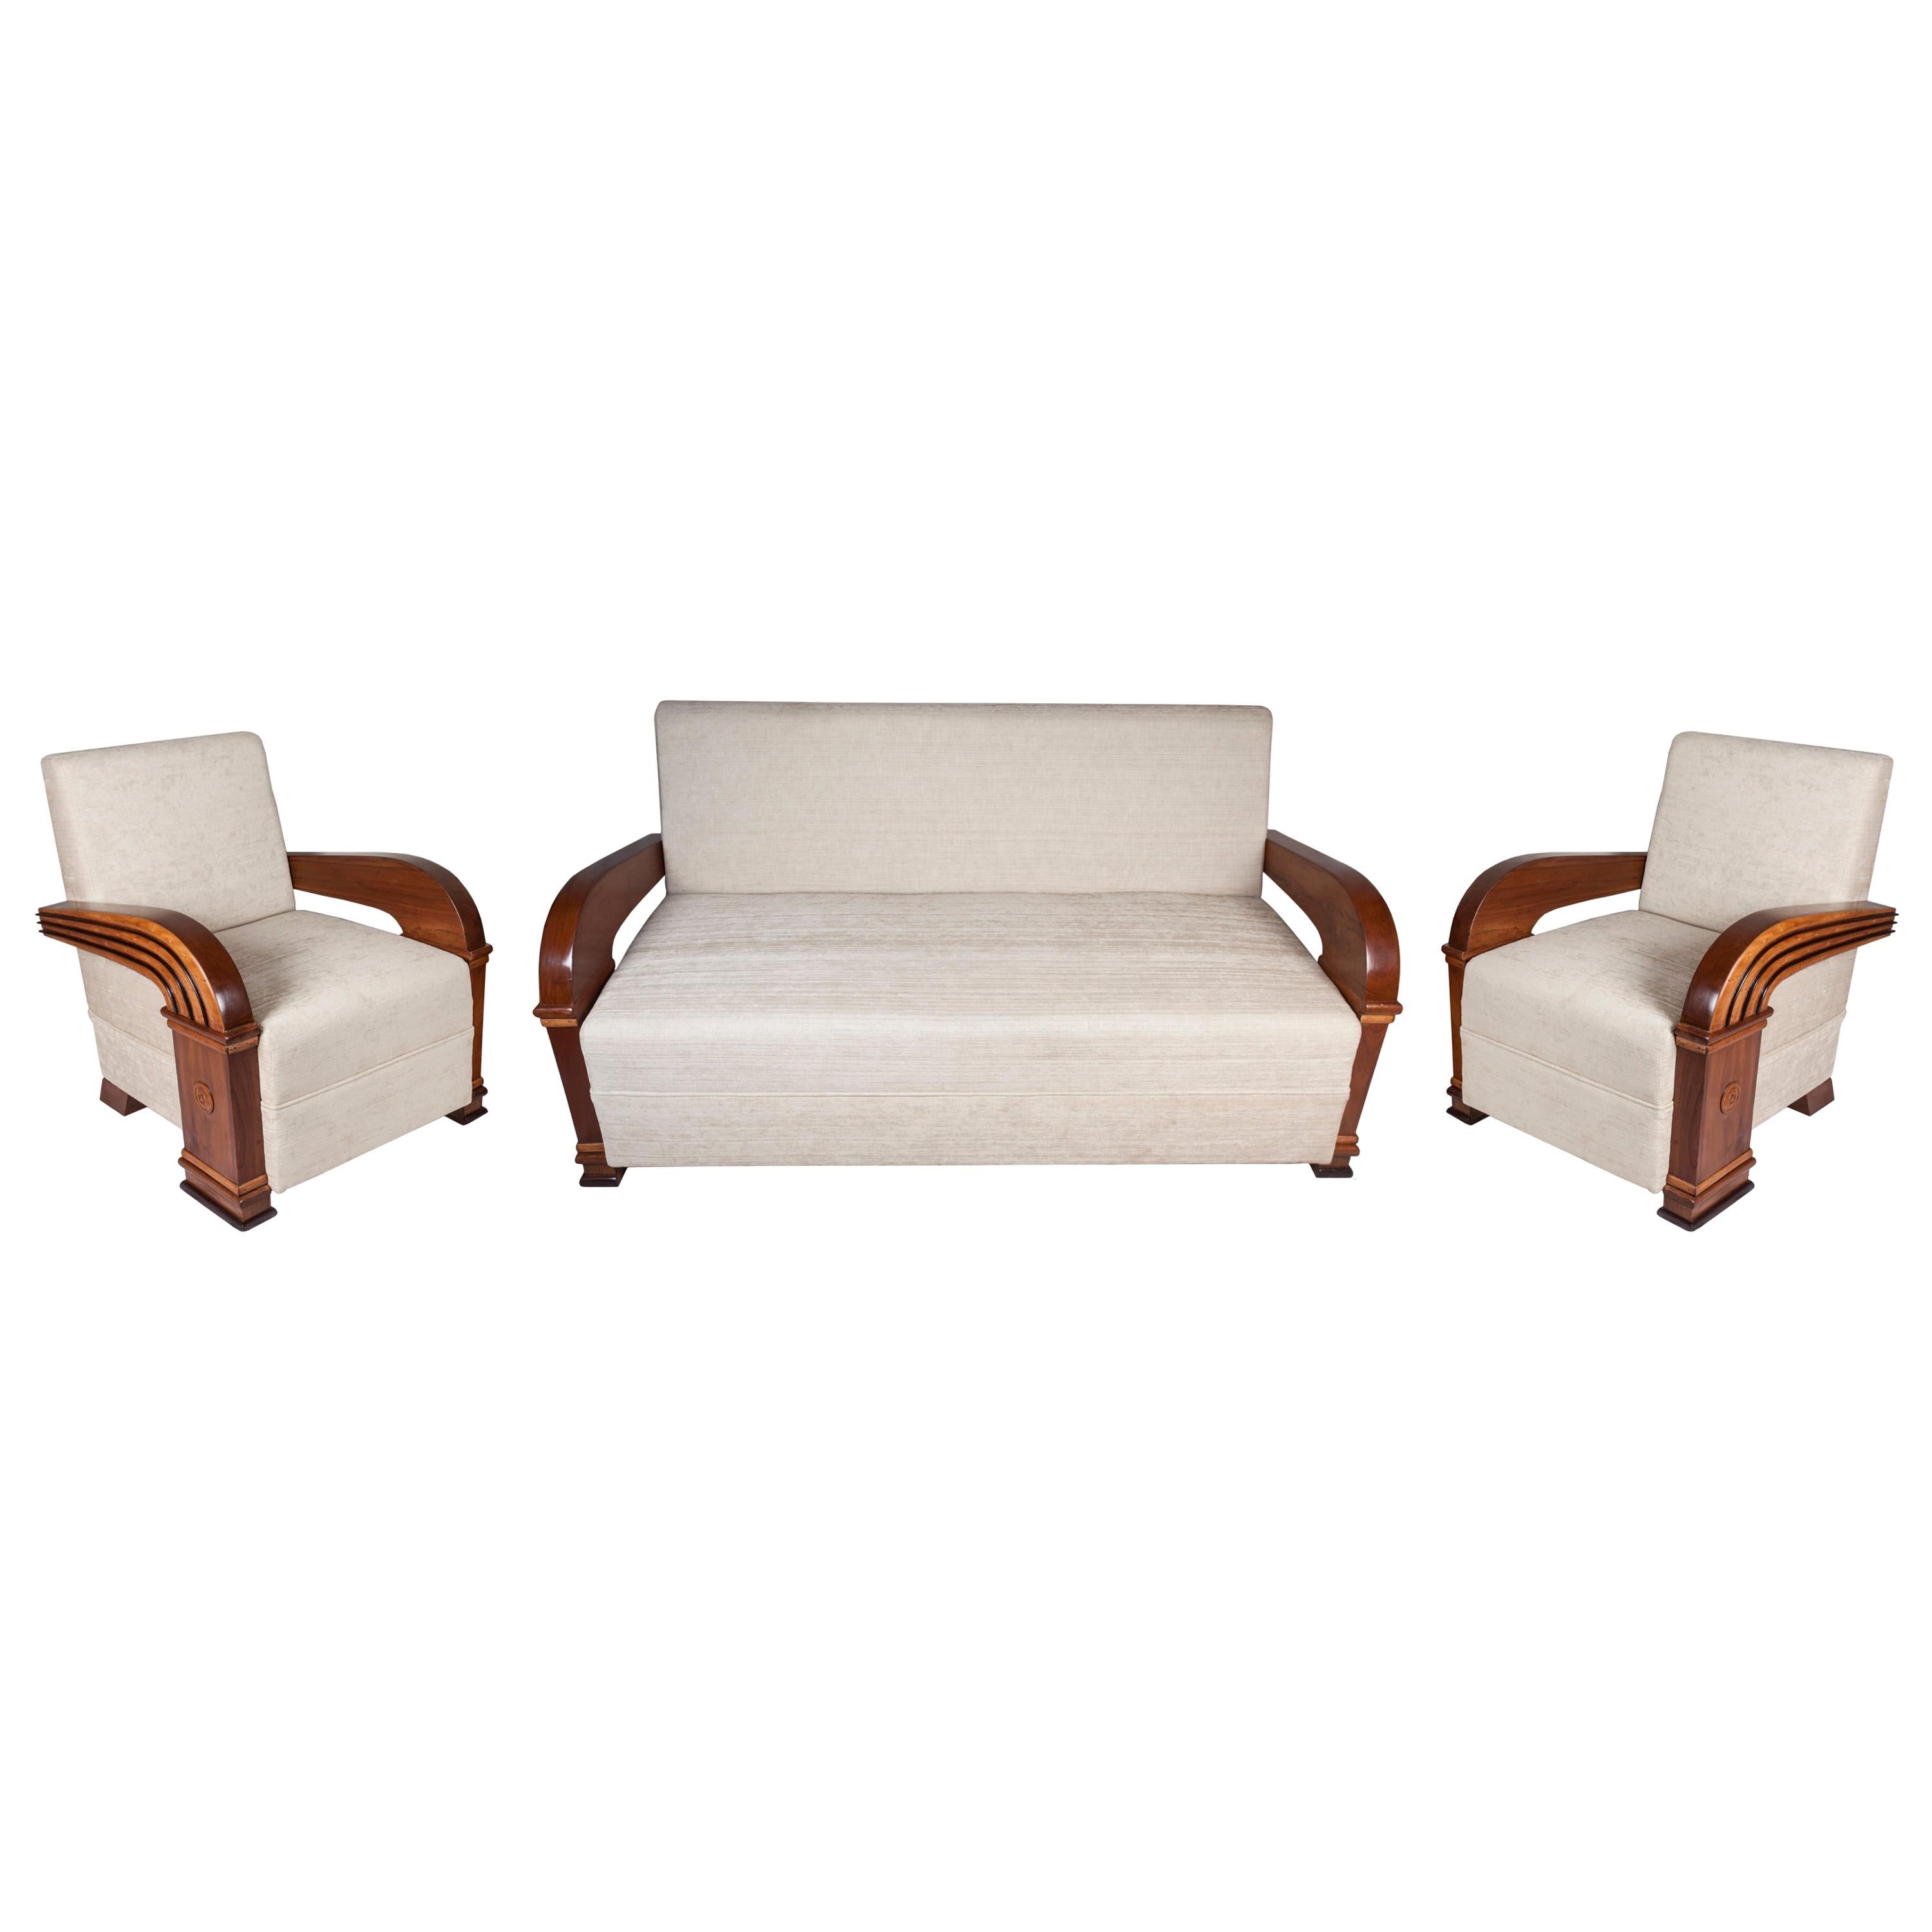 Art Deco Upholstered Teak Living Room Set Comprised of Loveseat & Pair of Chairs